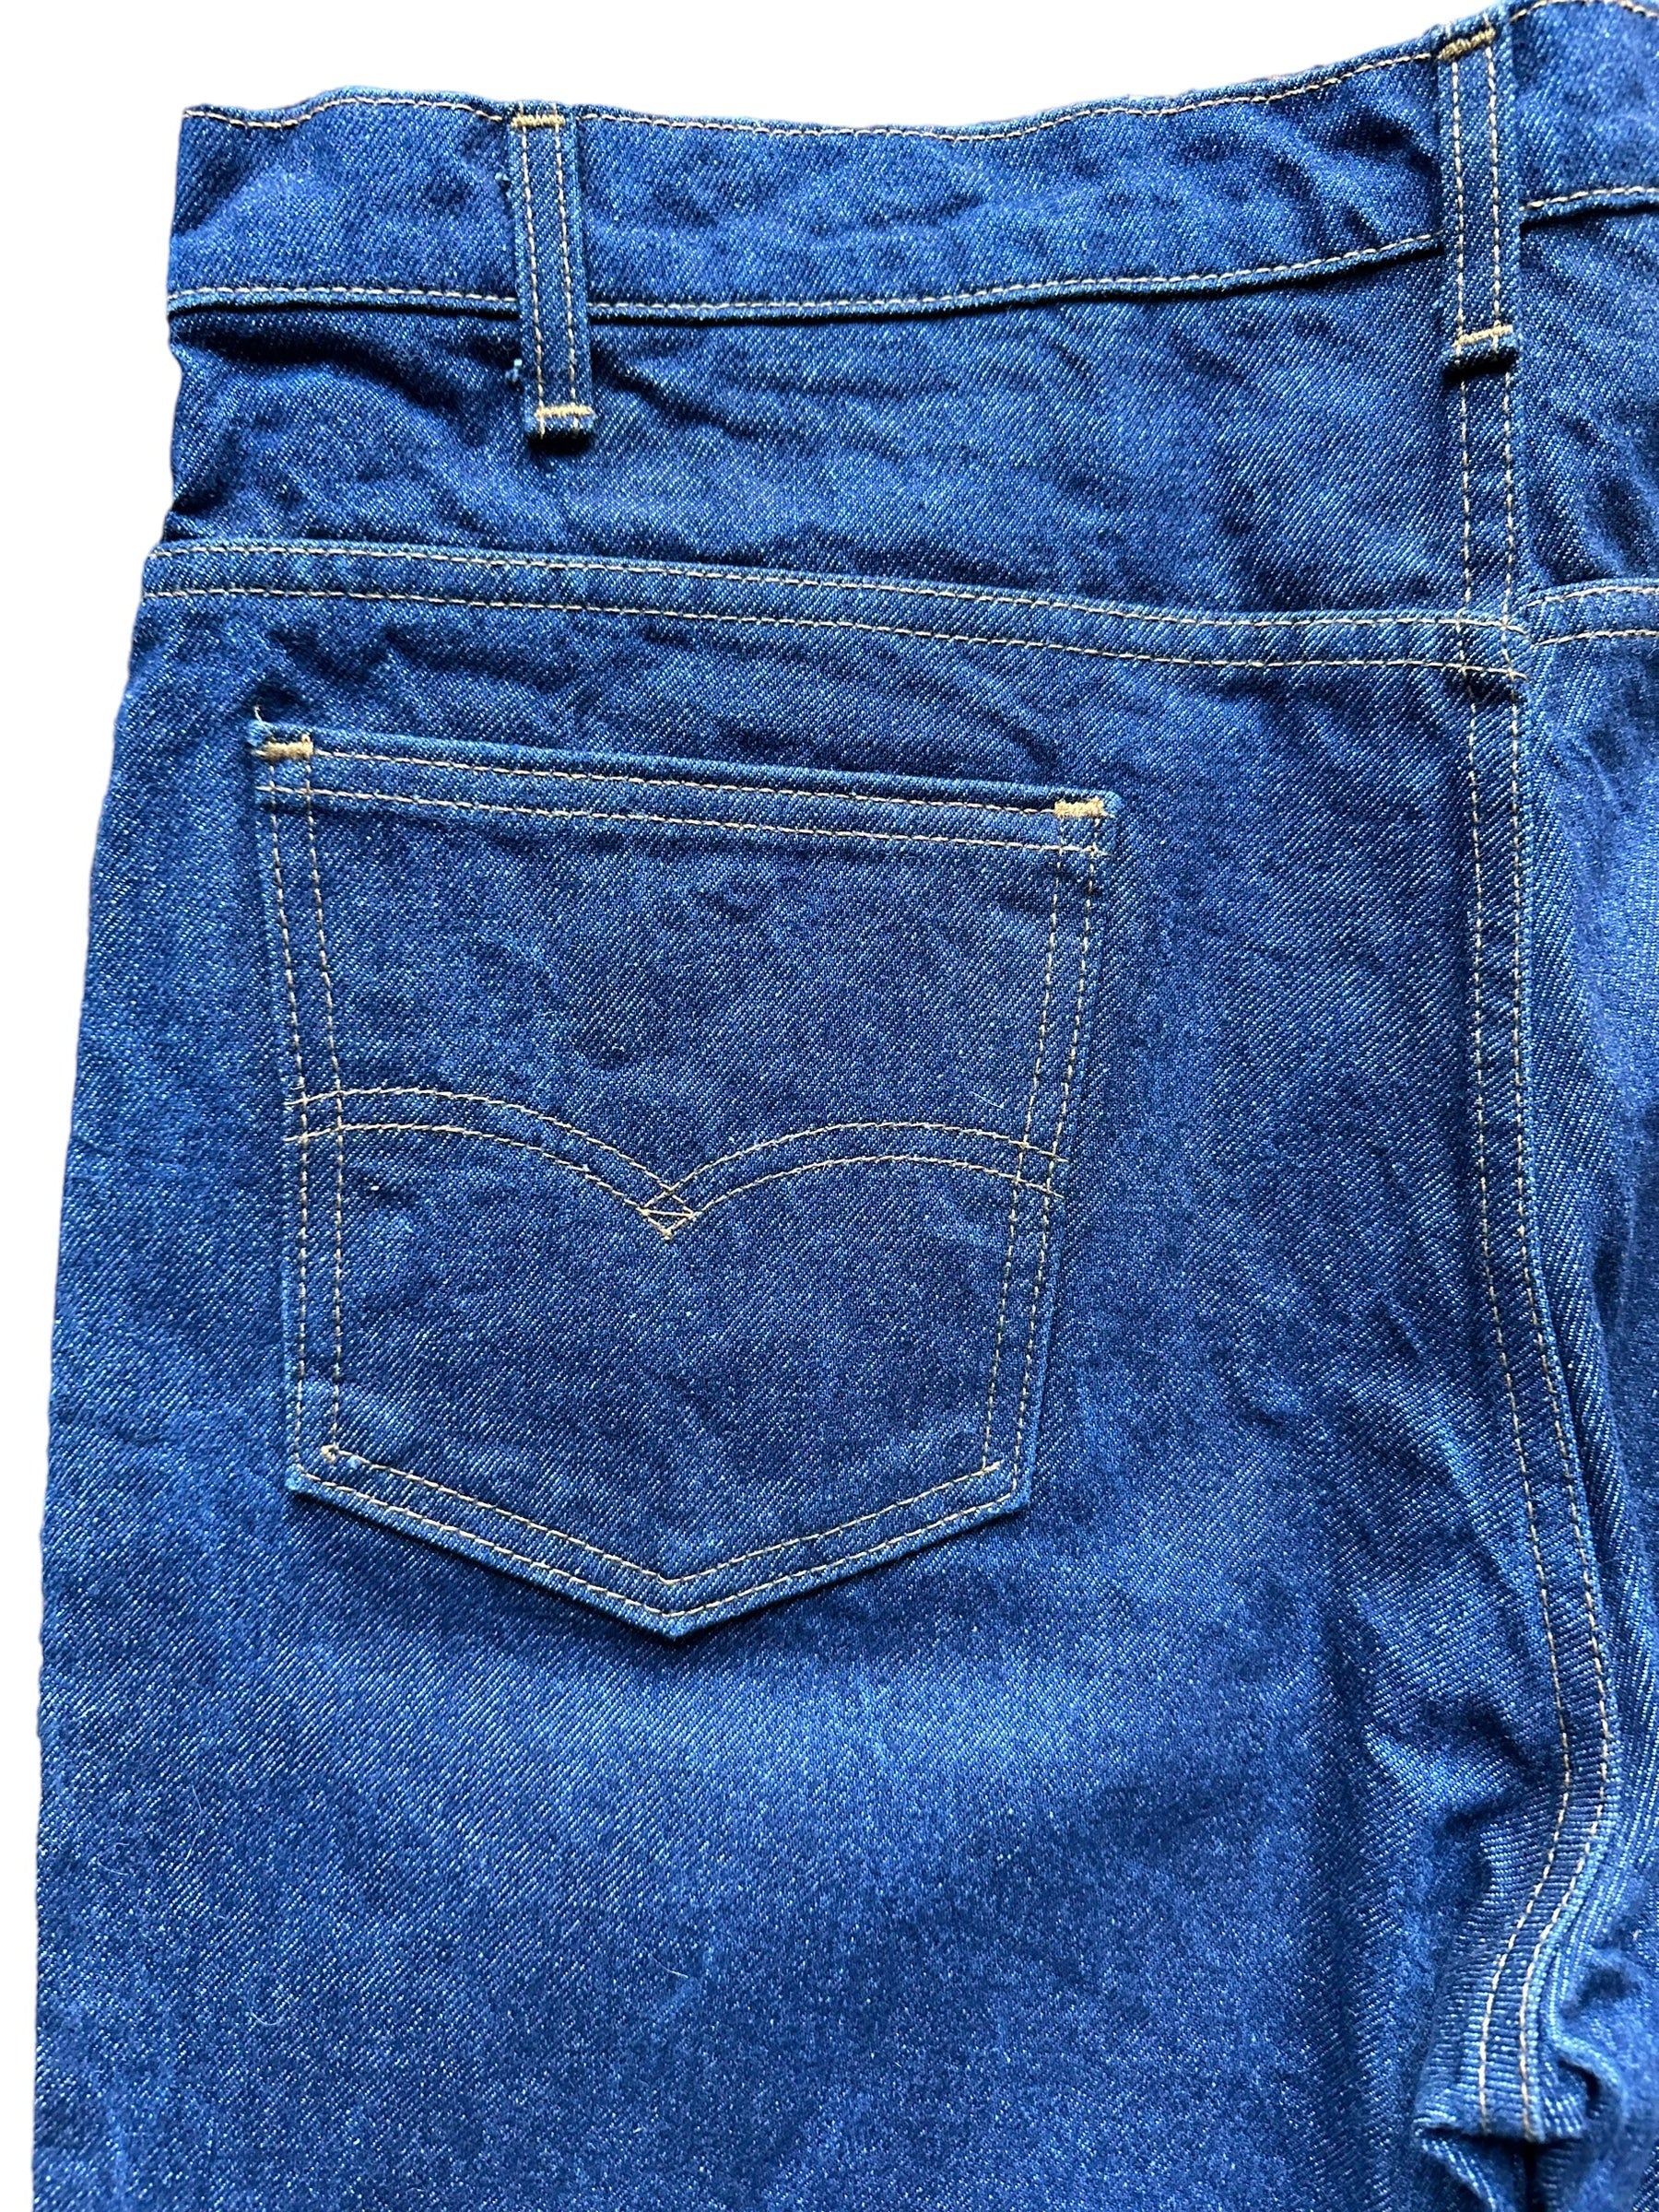 Back left pocket view of Deadstock 90s USA Levi's 501 Black Jeans 26x33 | Seattle Deadstock Vintage Jeans | Barn Owl Vintage Denim